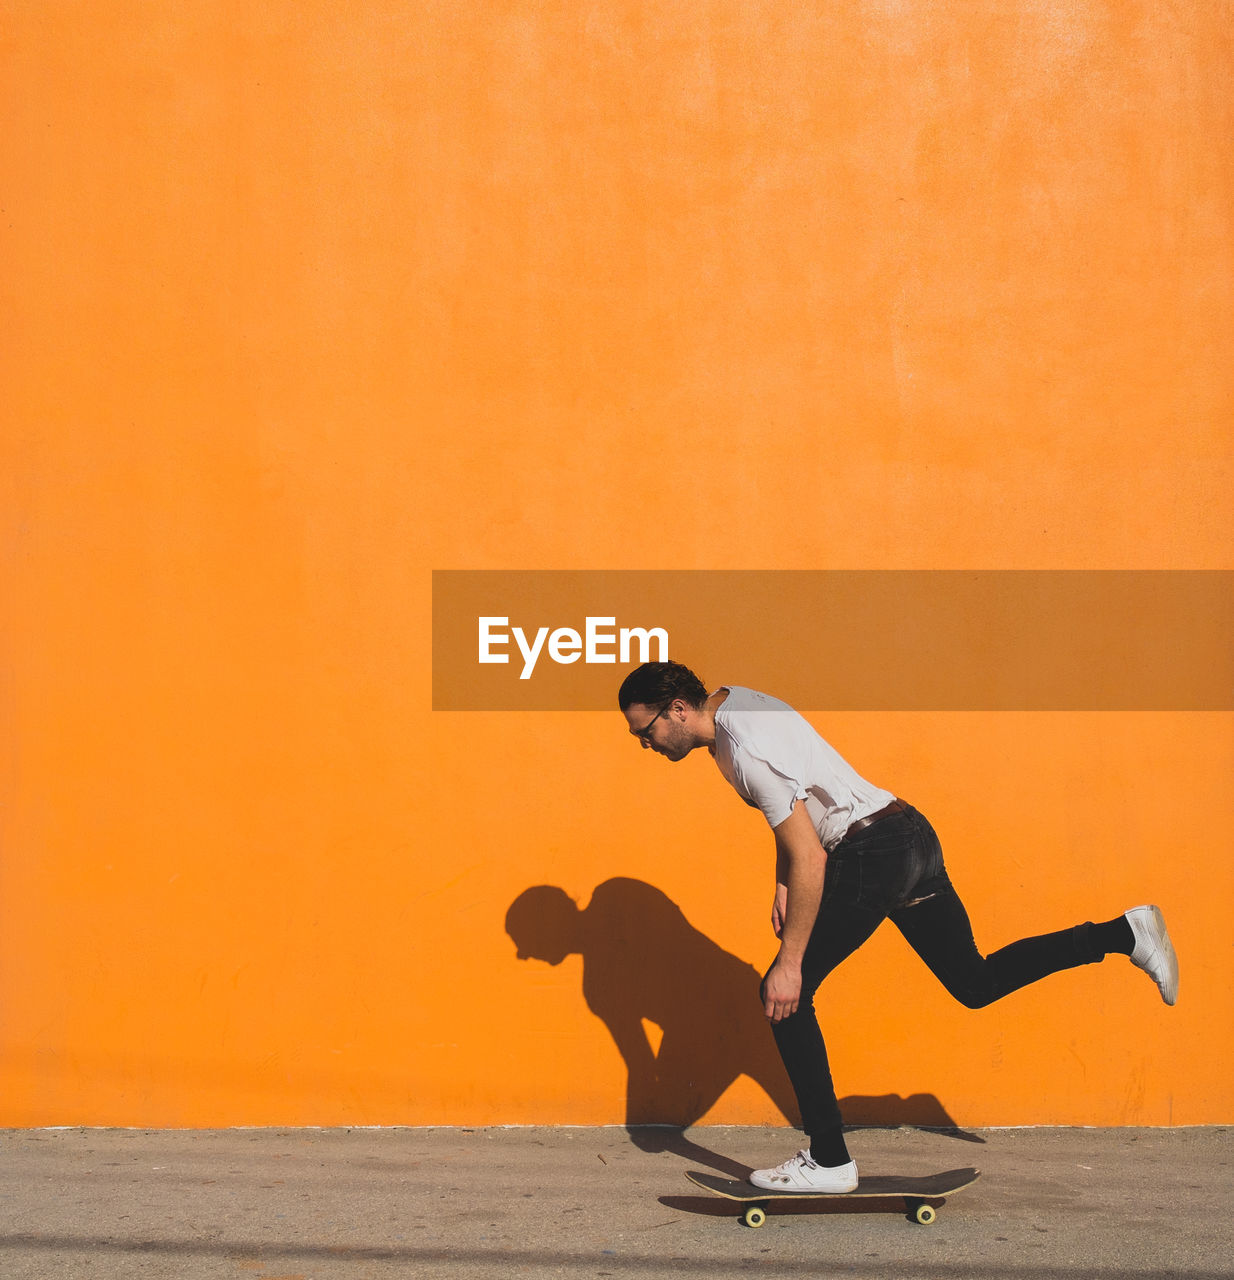 Man skateboarding on street against yellow wall